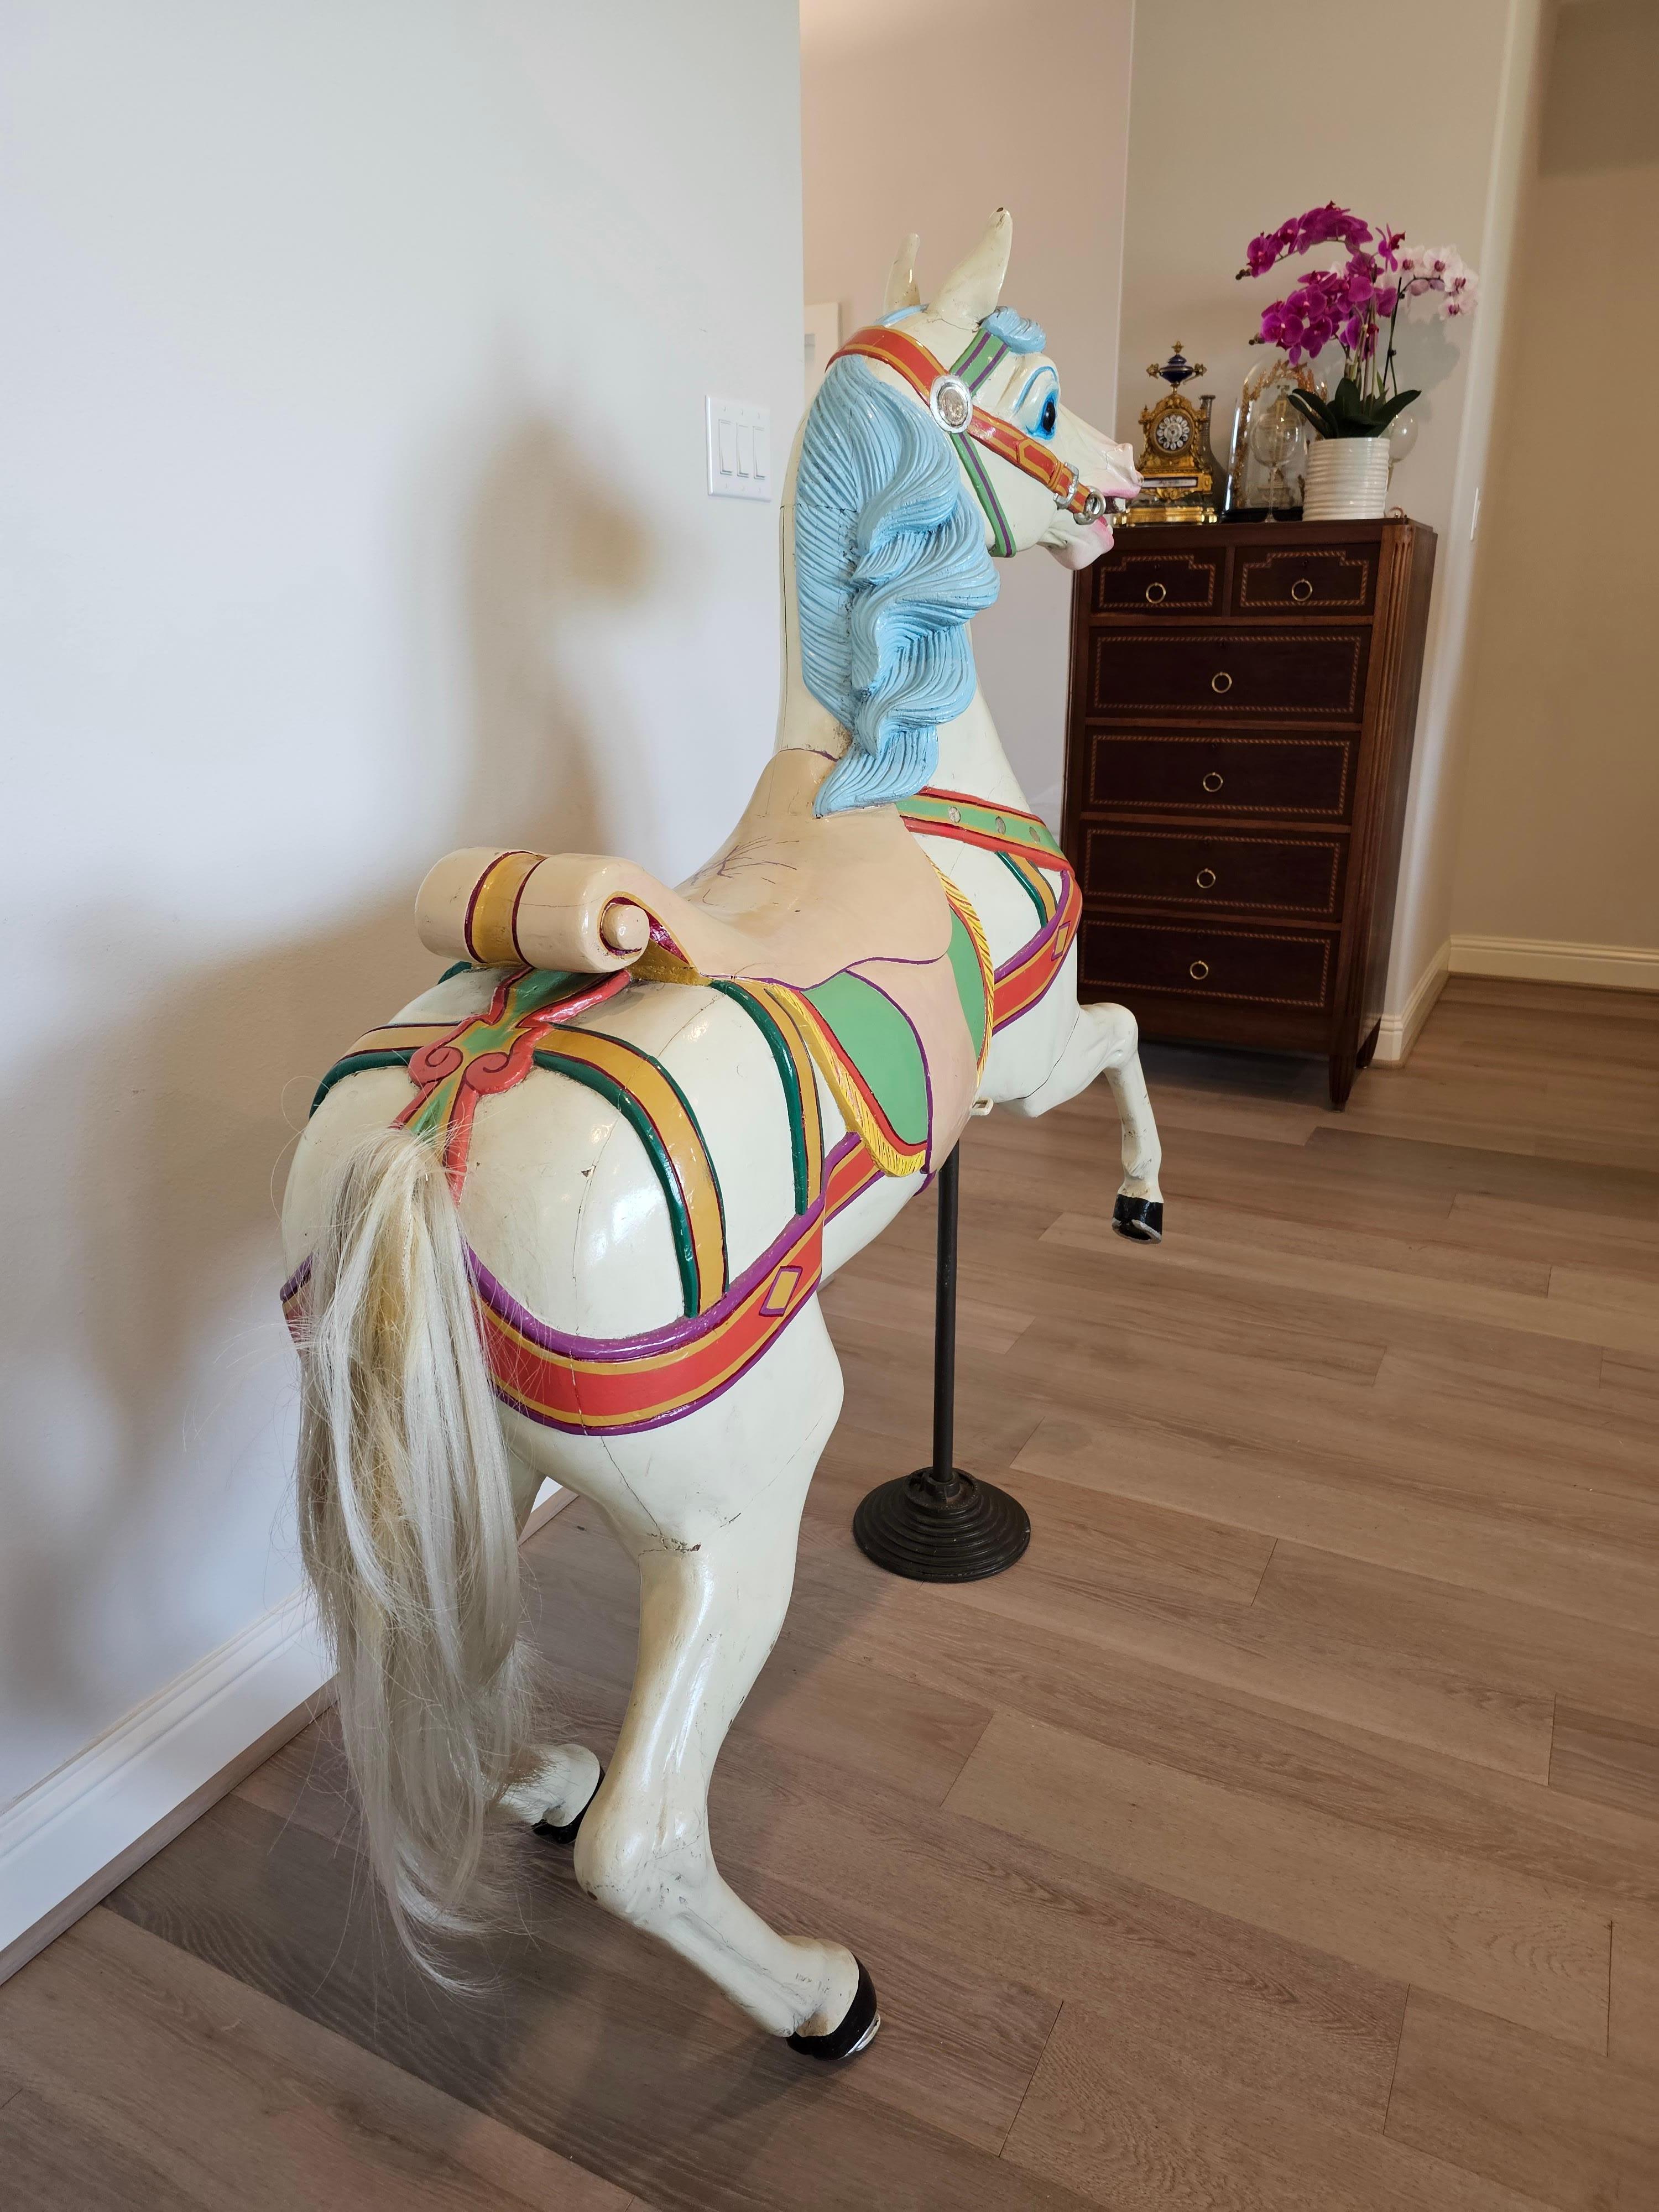 antique carousel horse